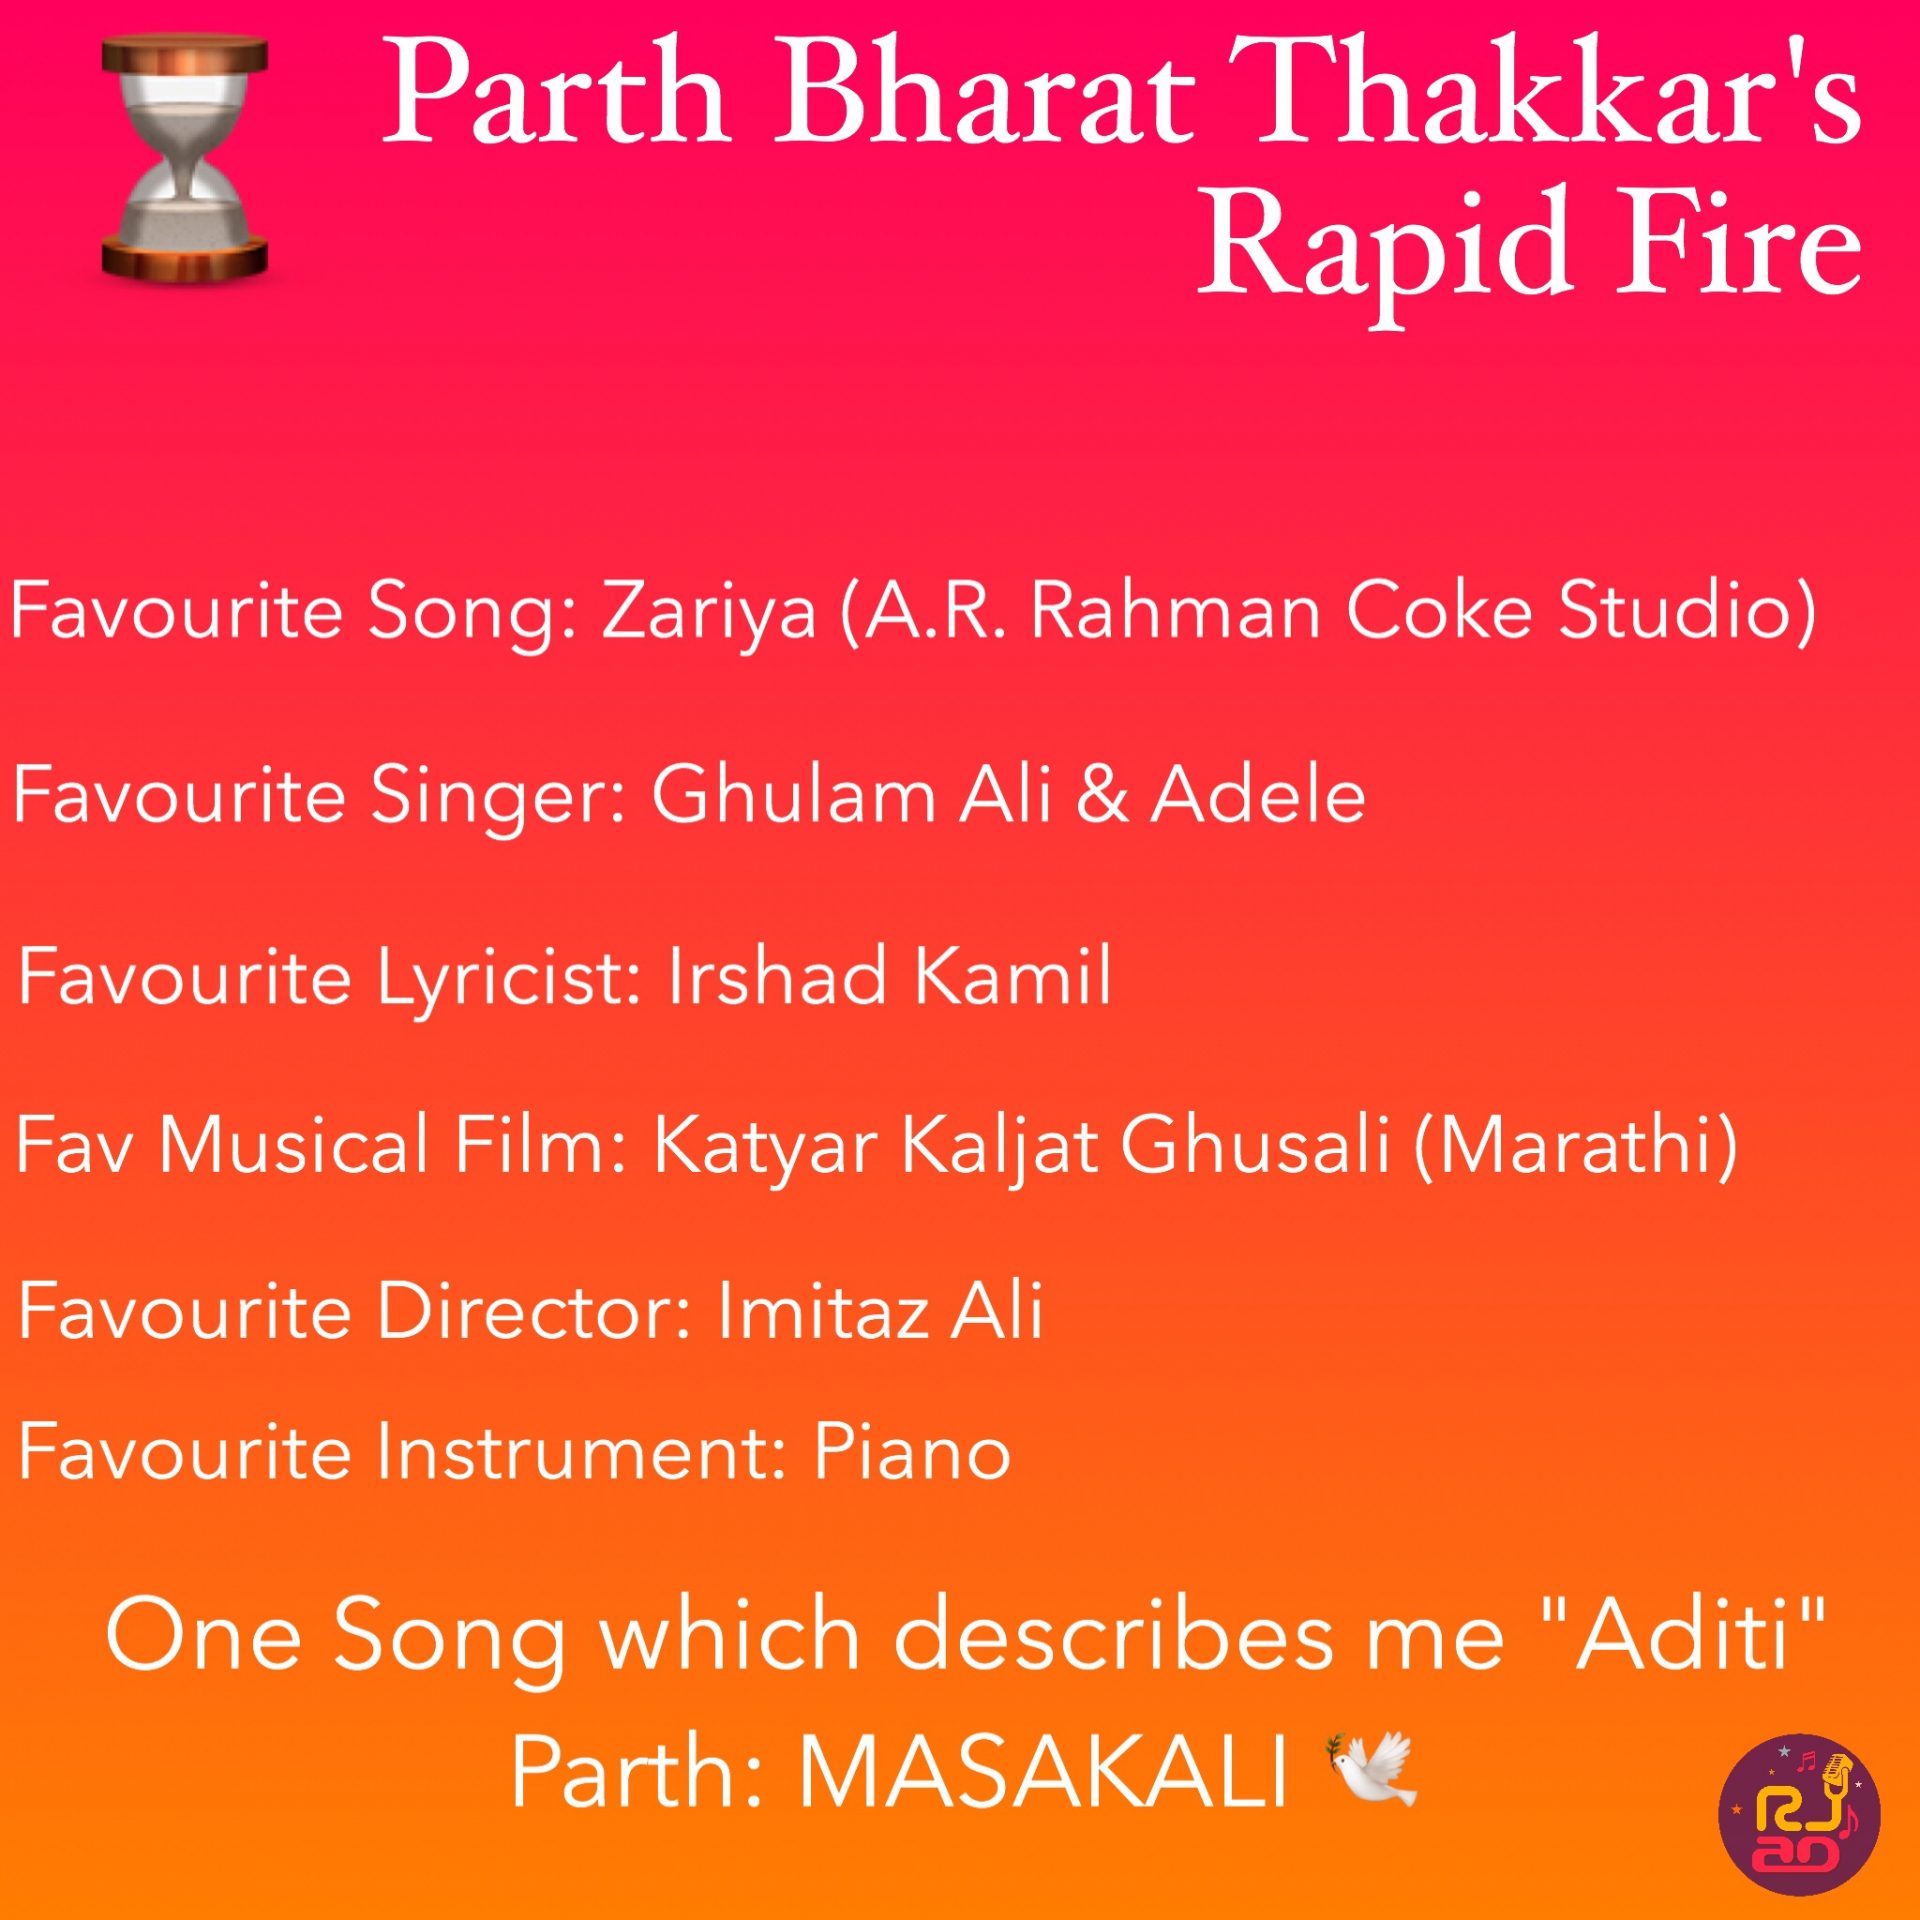 Rapid Fire with Parth Bharat Thakkar